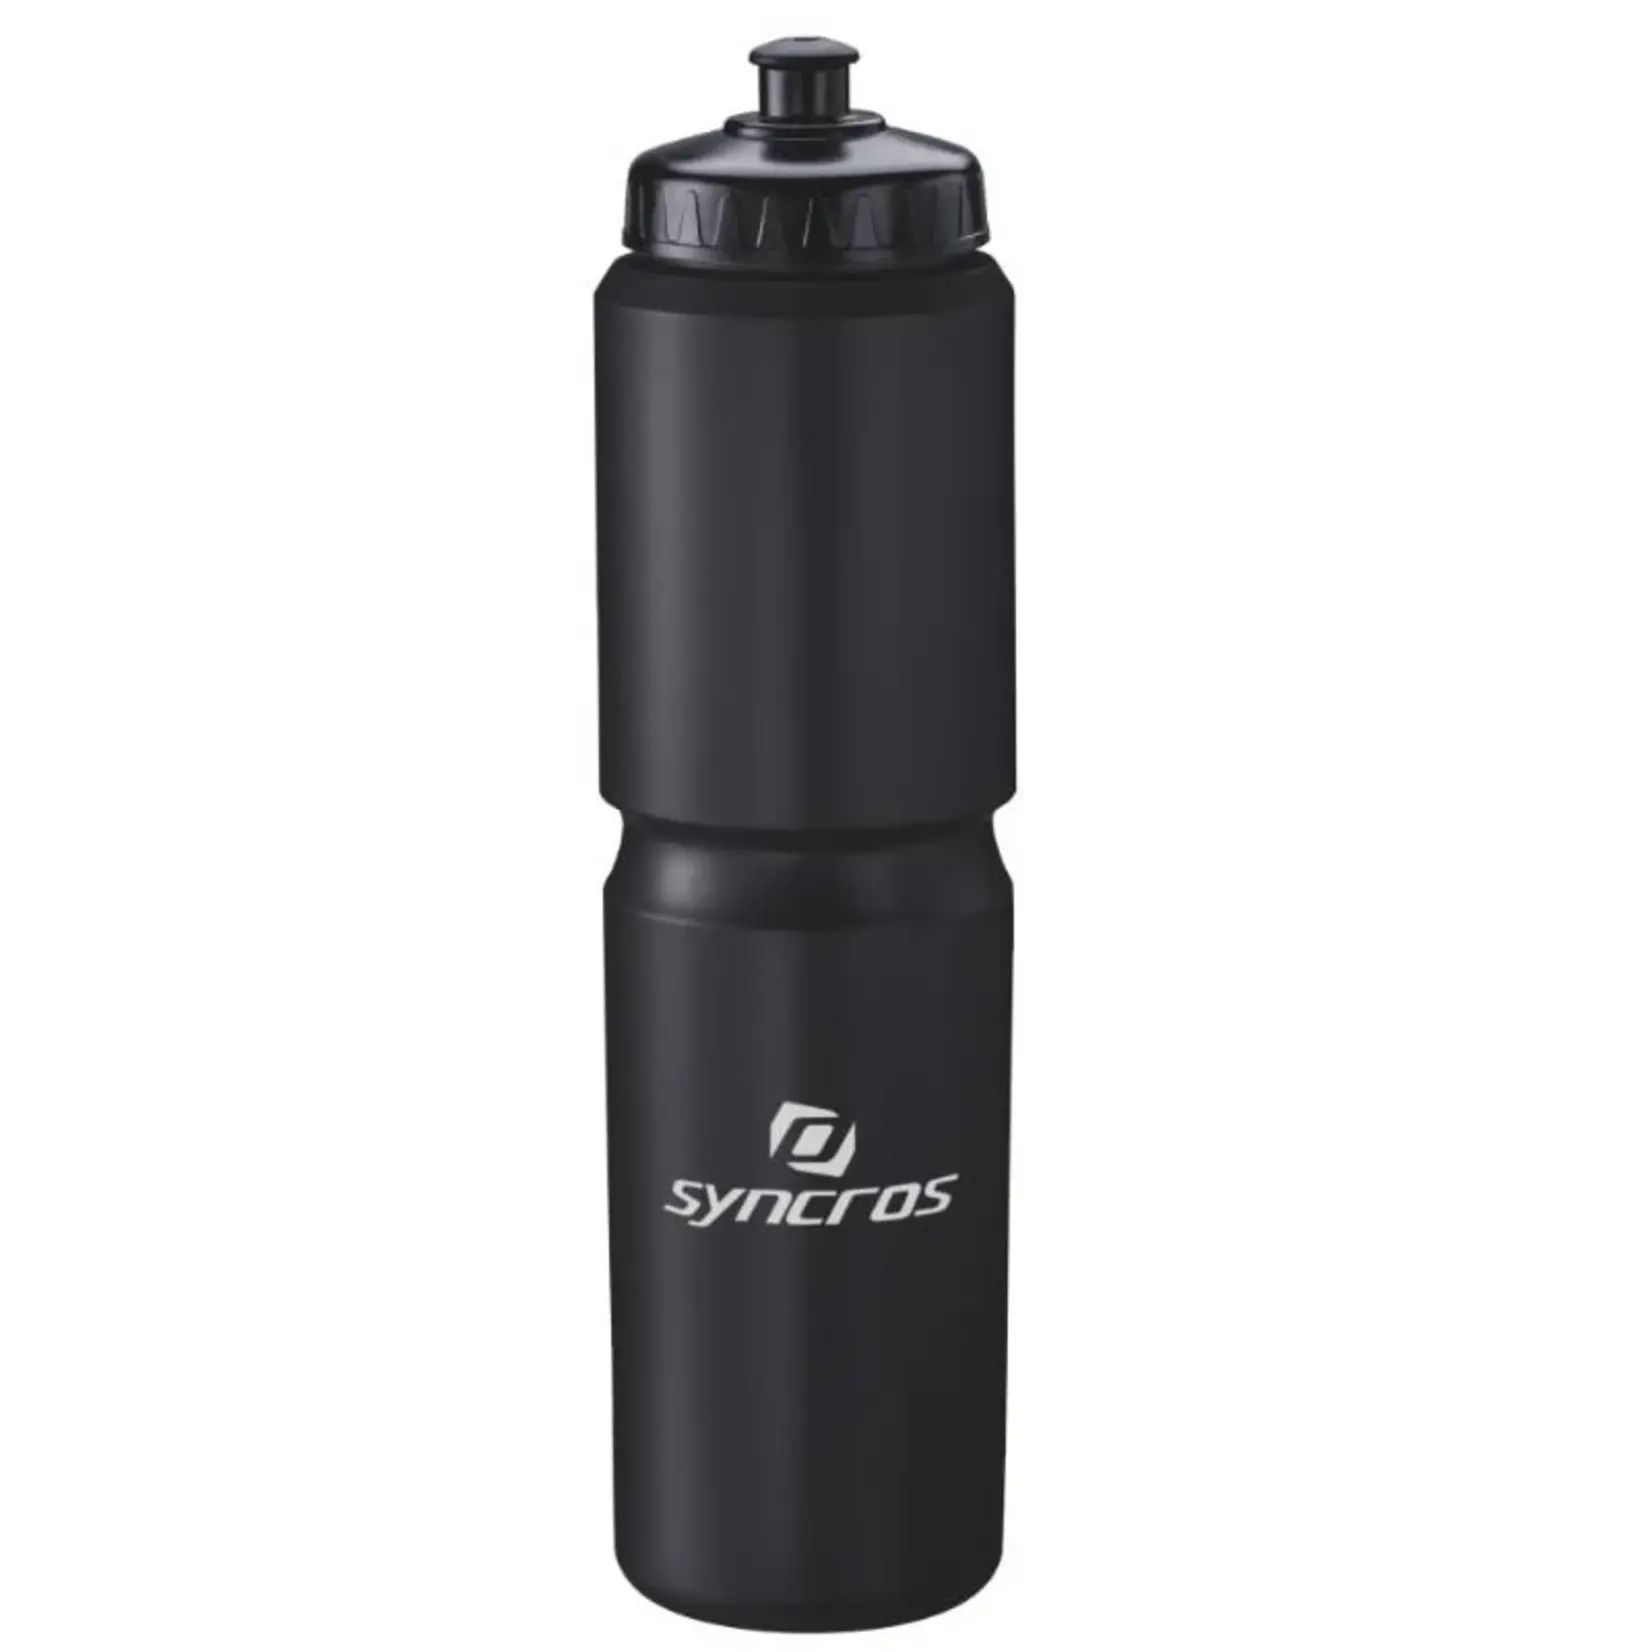 Syncros Syncros Water Bottle 1L Black